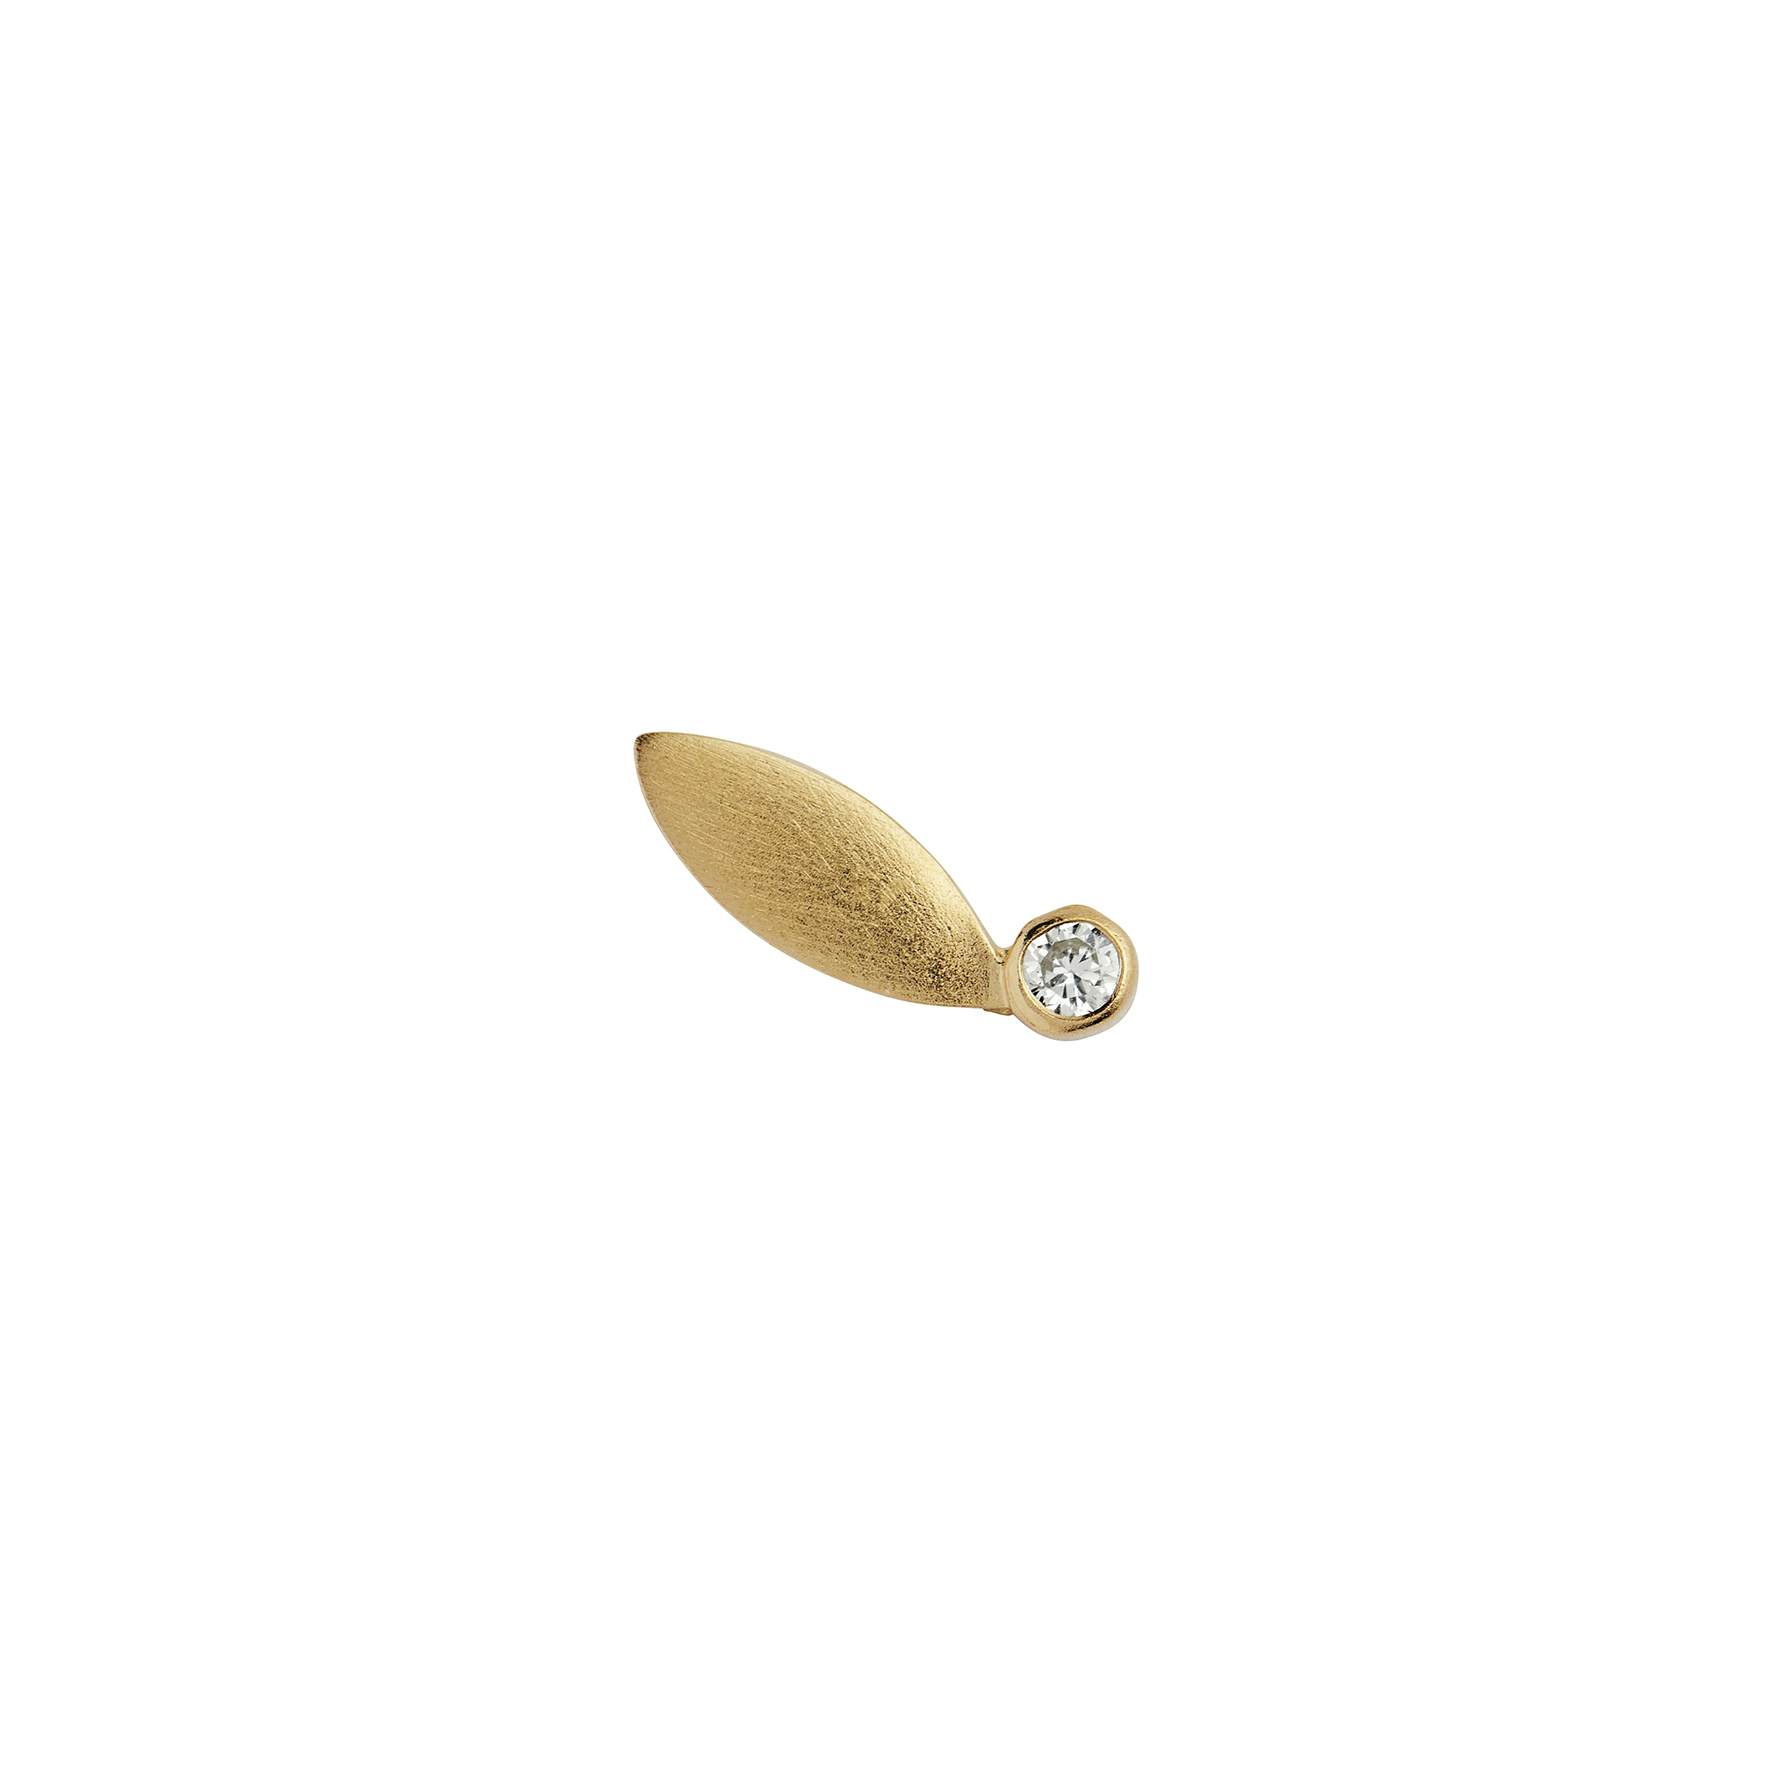 Big Dot Leaf Earstick Light Peridot von STINE A Jewelry in Vergoldet-Silber Sterling 925|Matt